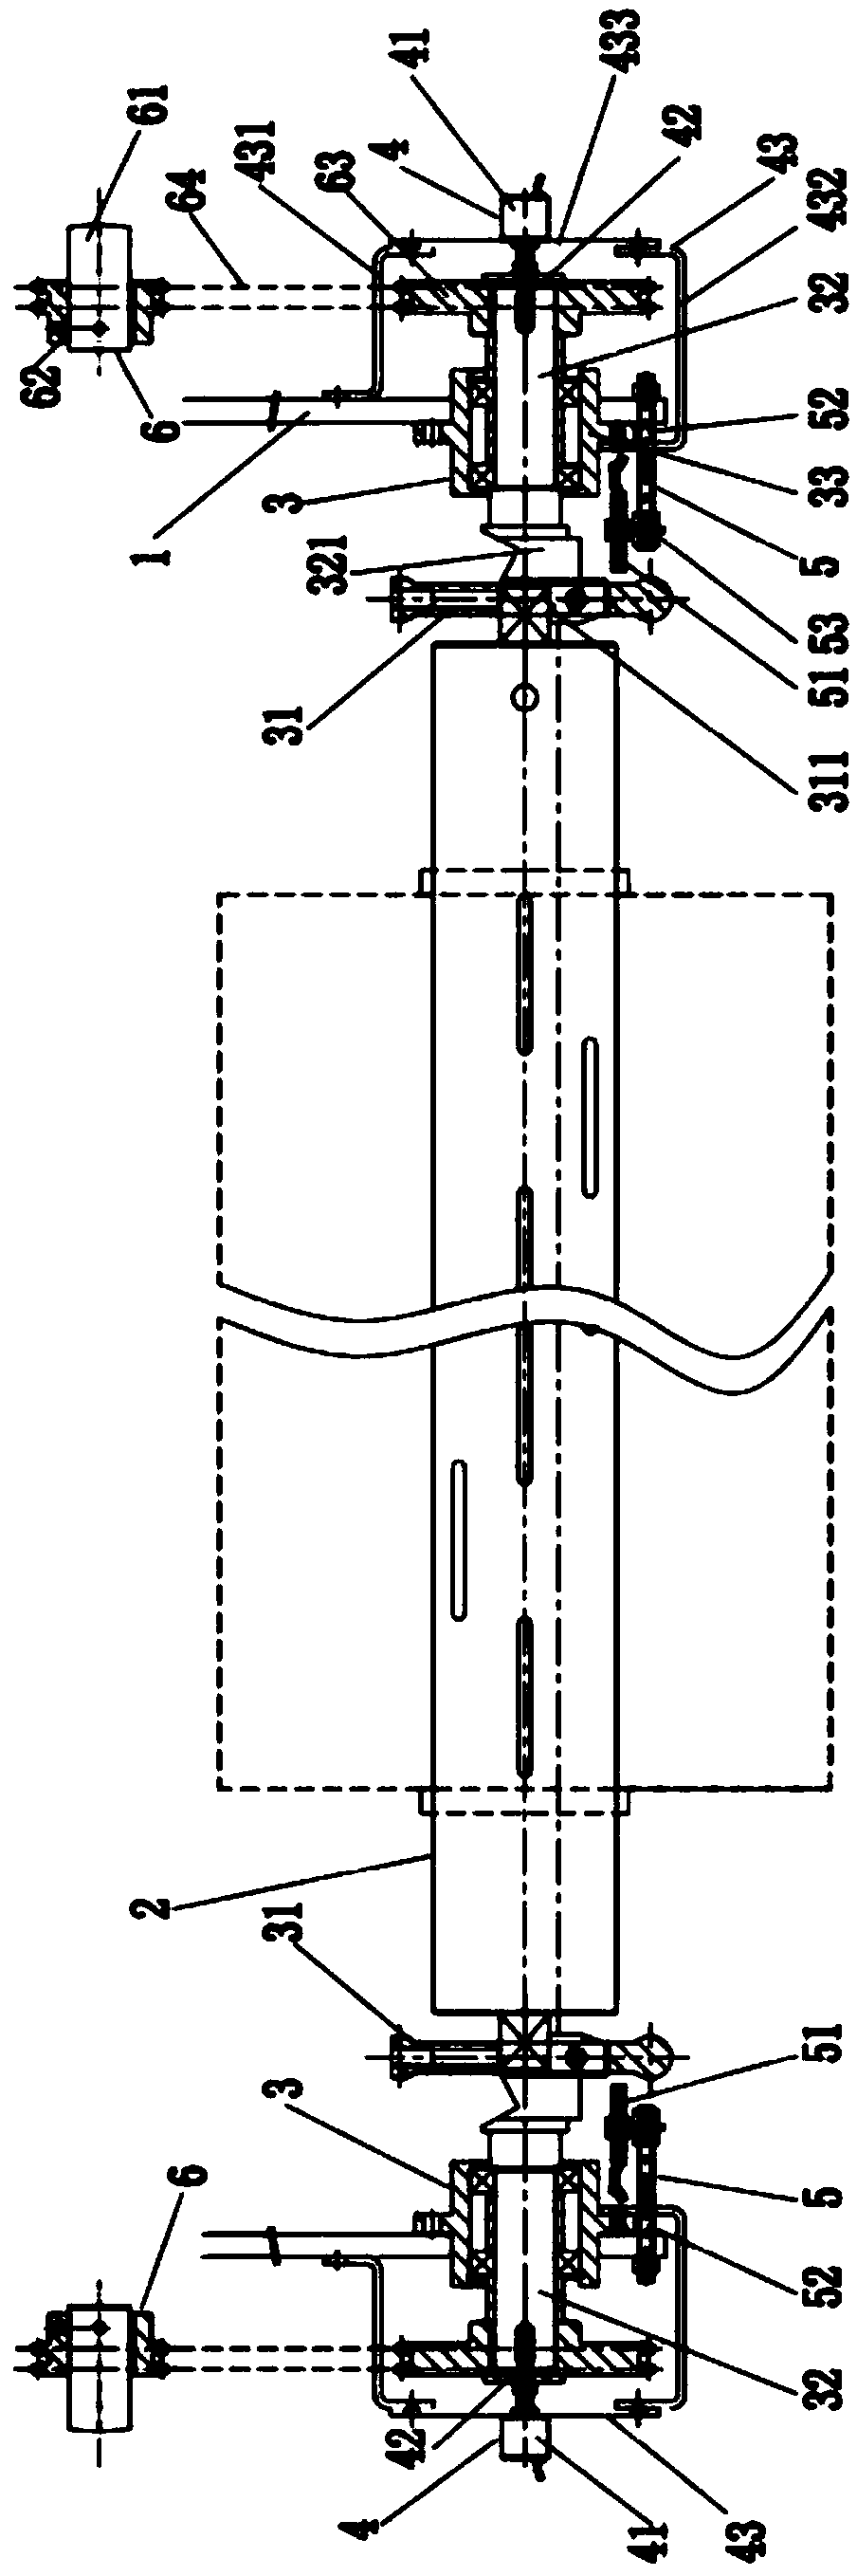 Aligning protection device for large-volume center roller flange